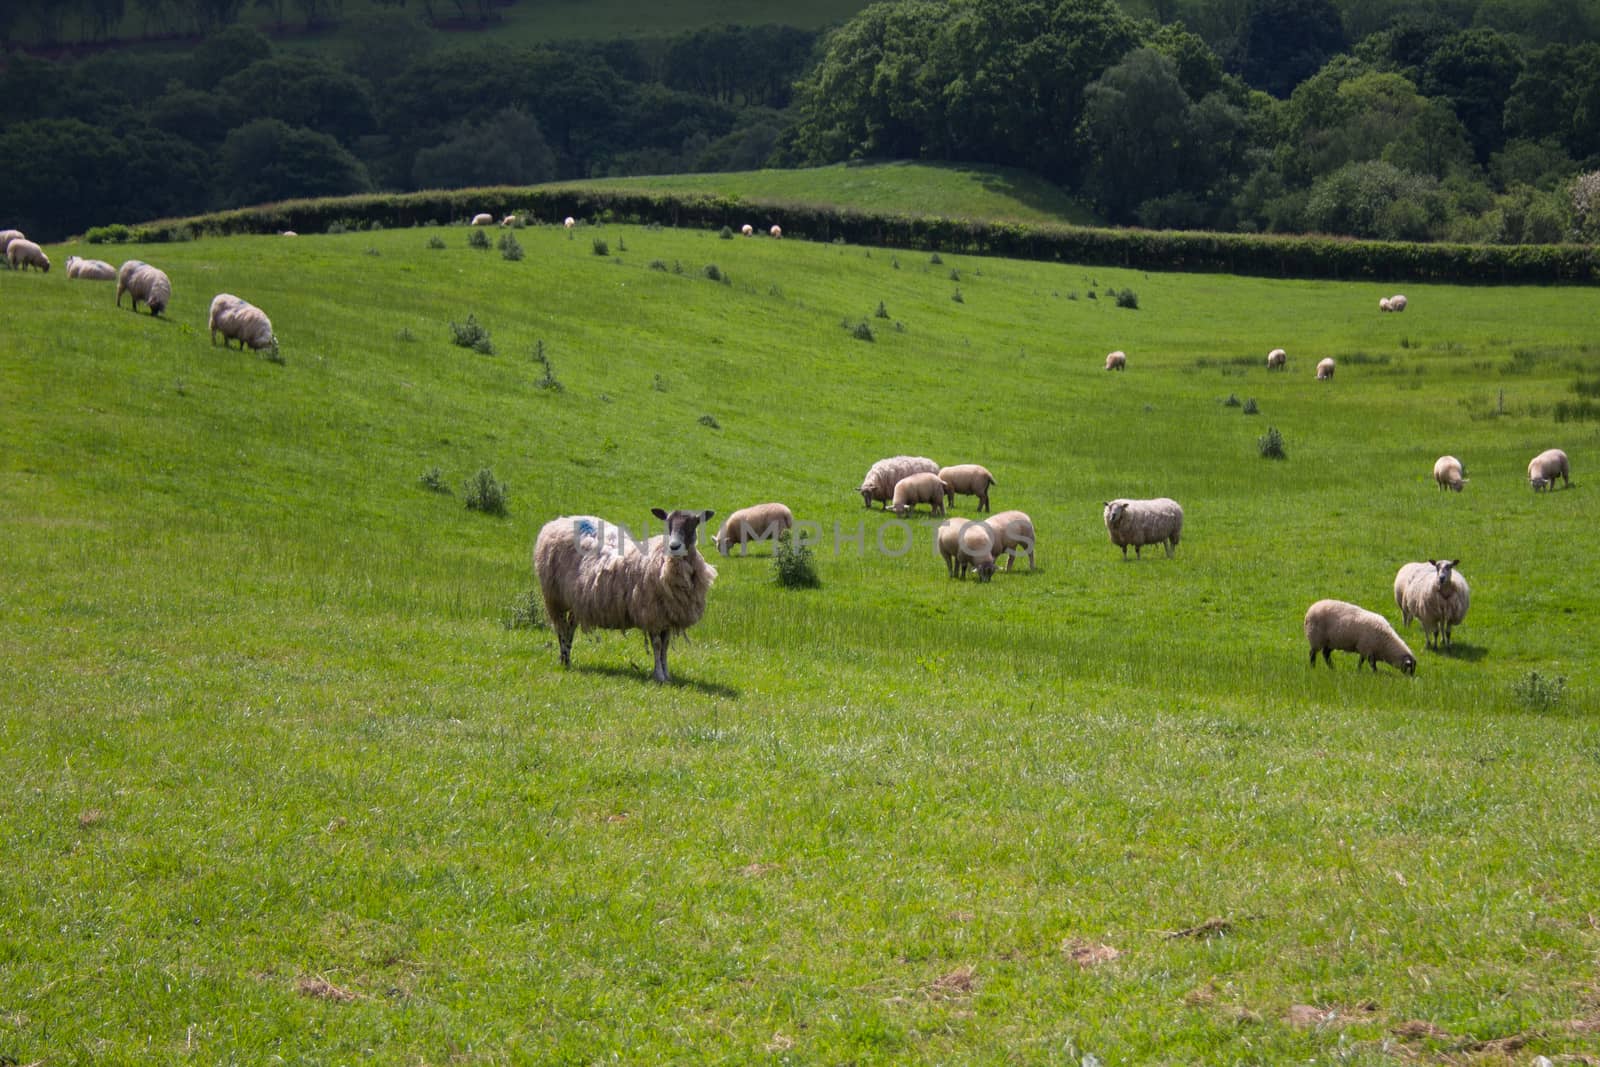 Sheep in Welsh field by magicbones